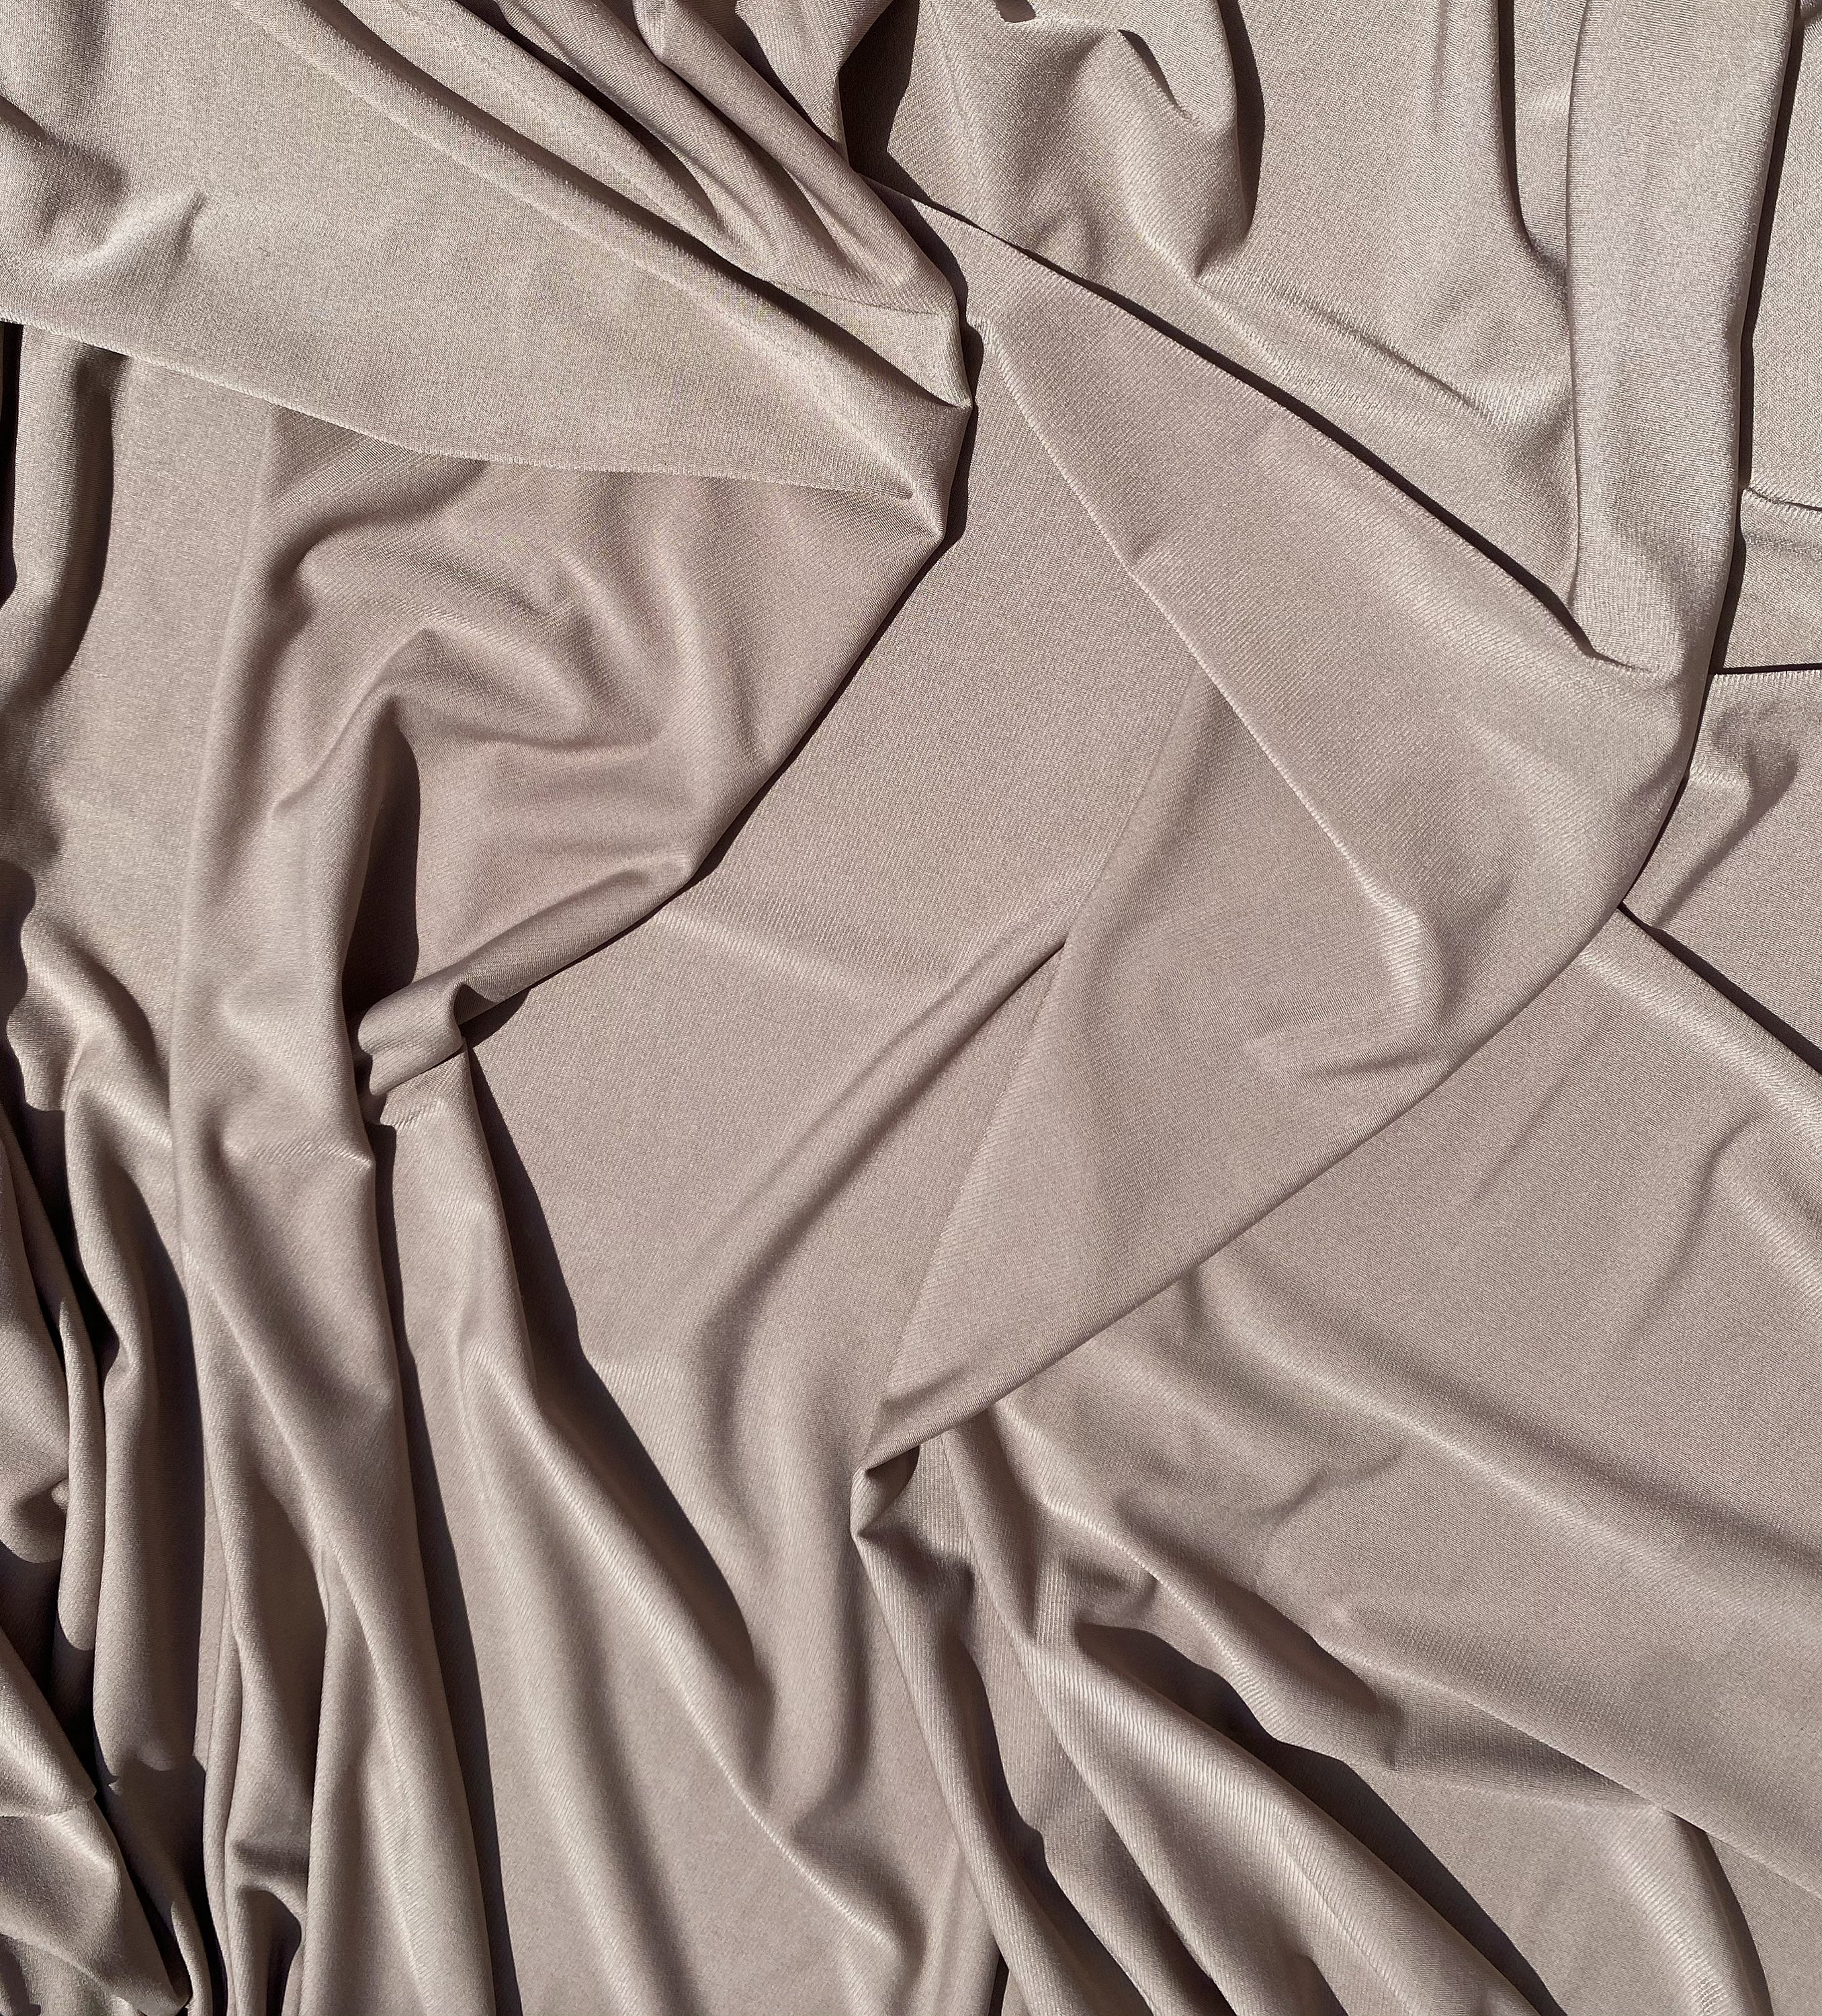 Cotton Jersey Lycra Spandex knit Stretch Fabric 58/60 wide (Khaki)